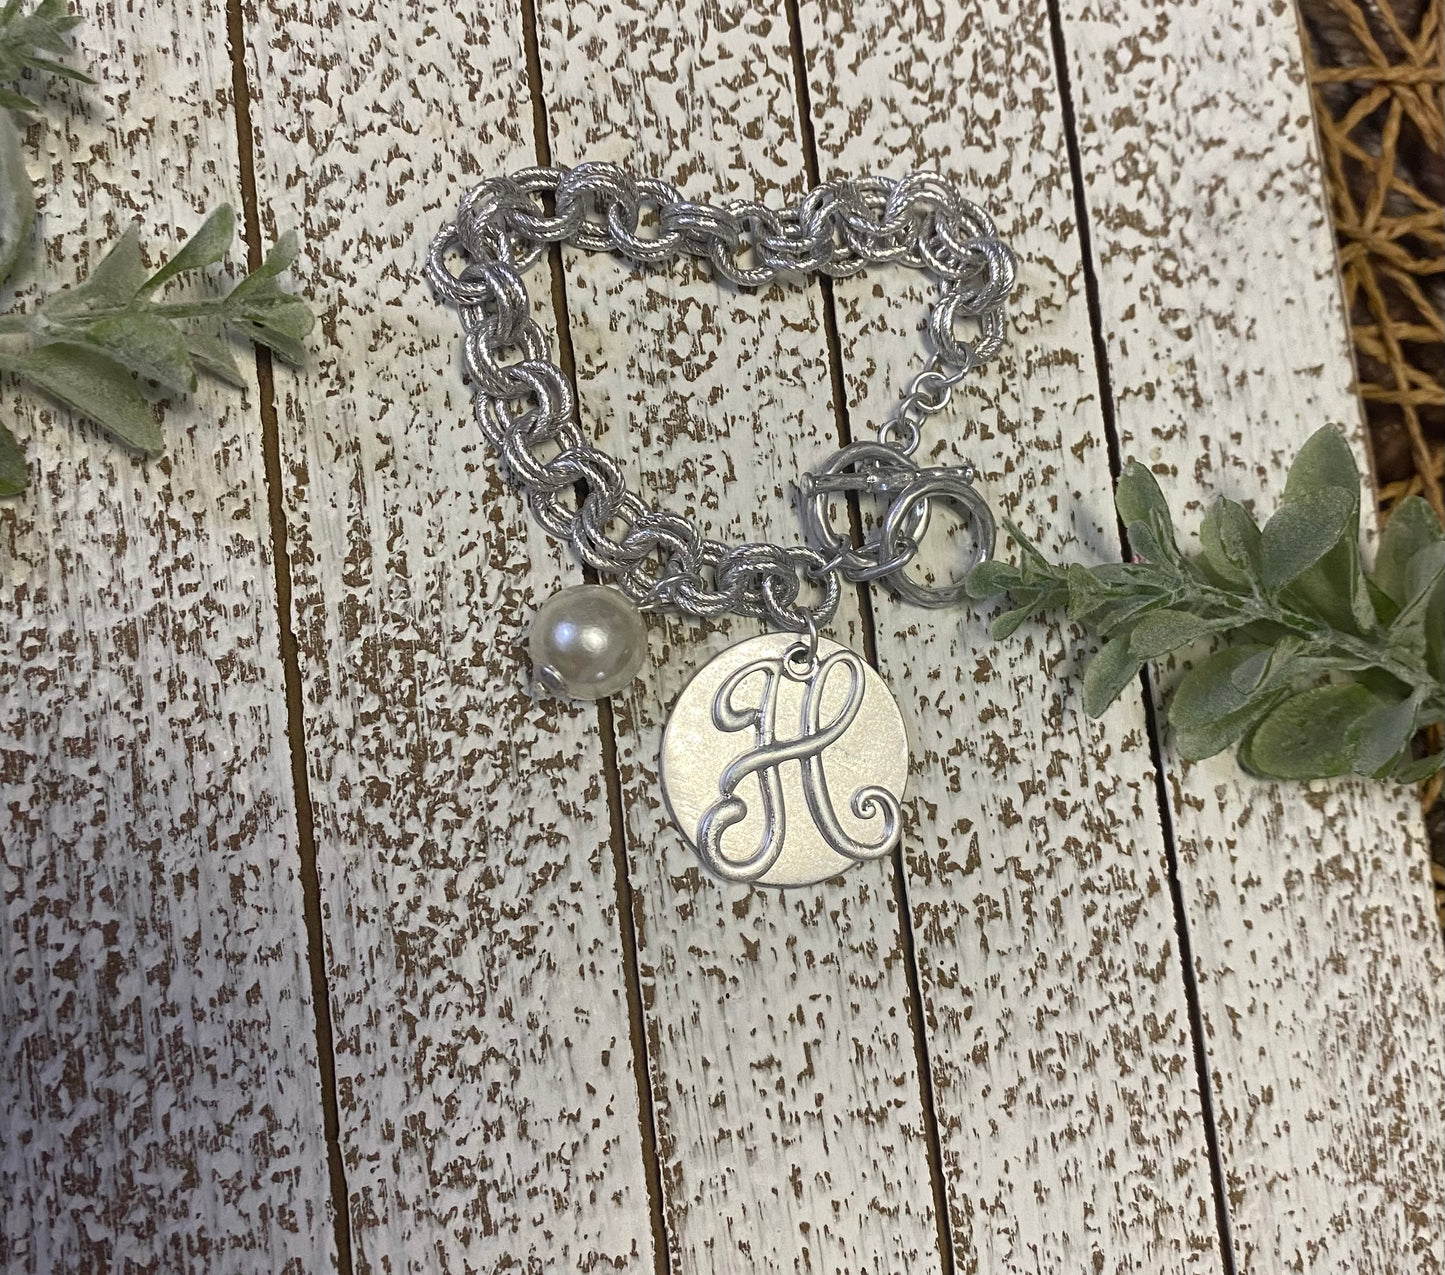 Chain Link Initial Bracelet